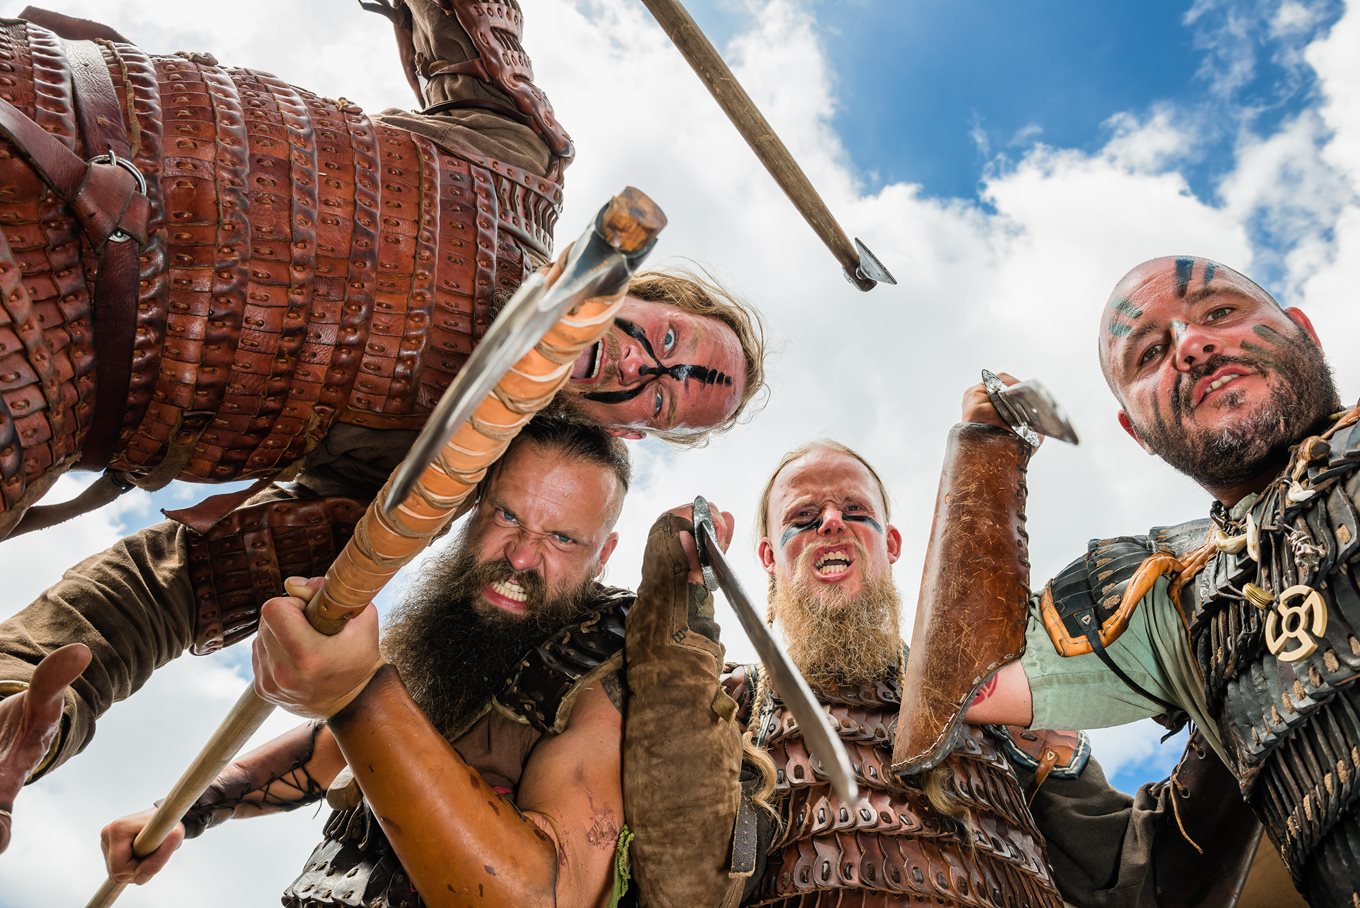 Viking Festival at Craggaunowen - July 30th & 31st 